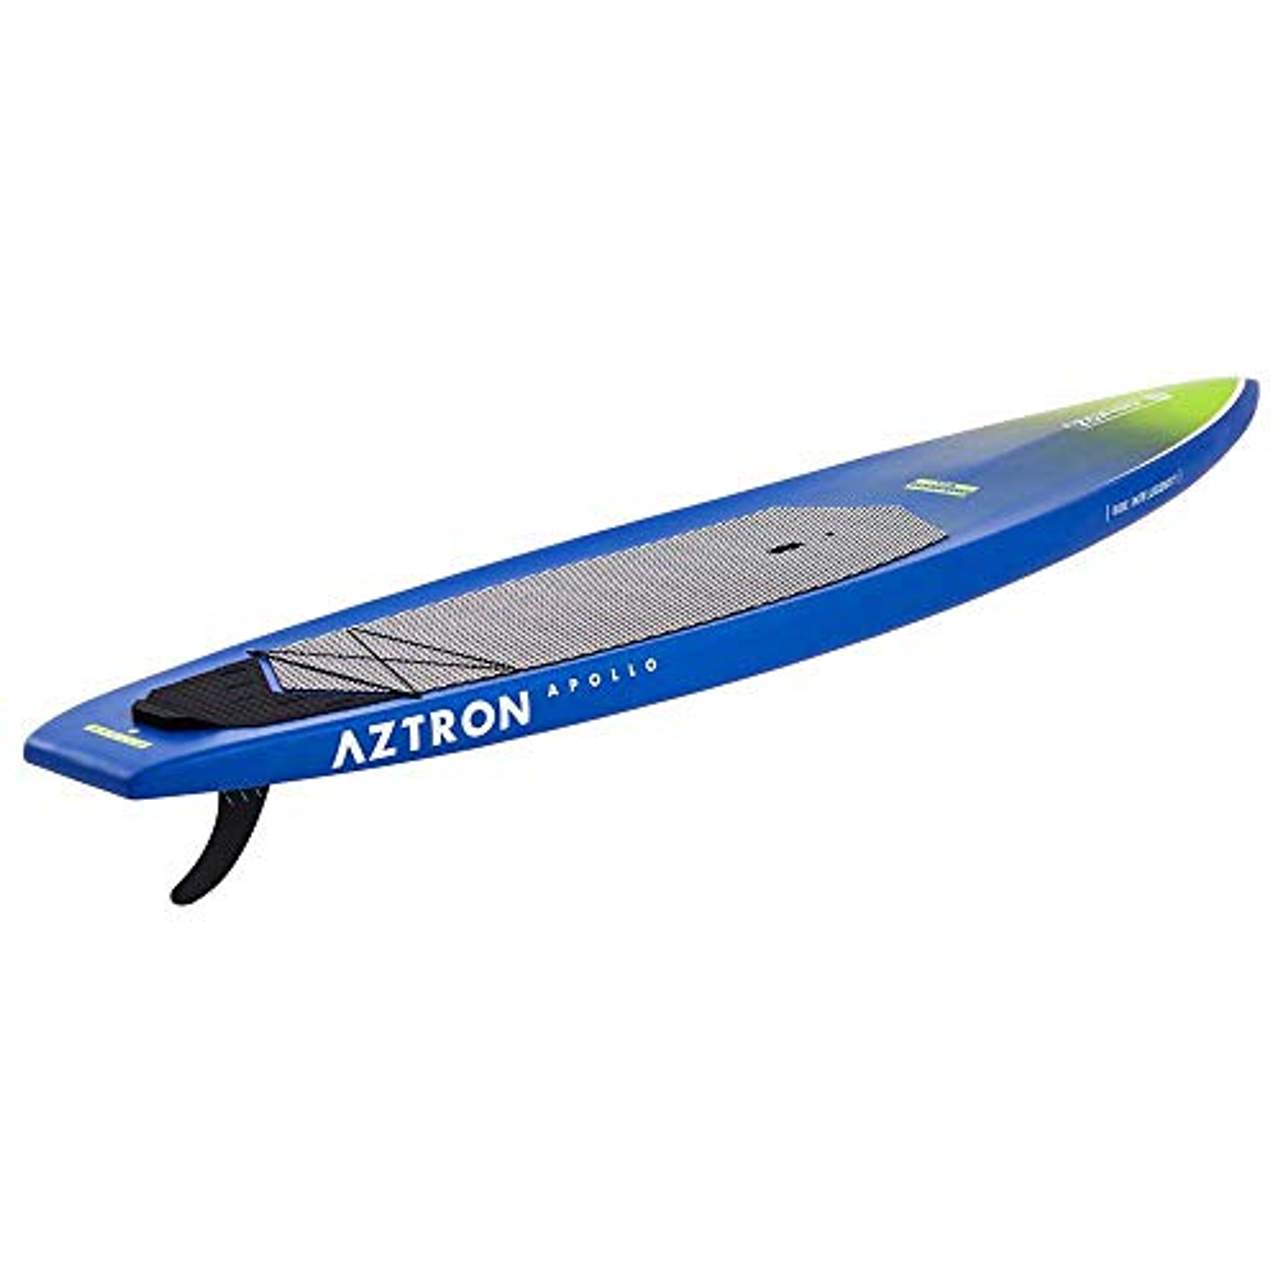 Aztron Apollo Epoxy 12'6" Fiberglass Board SUP Stand up Paddle Board